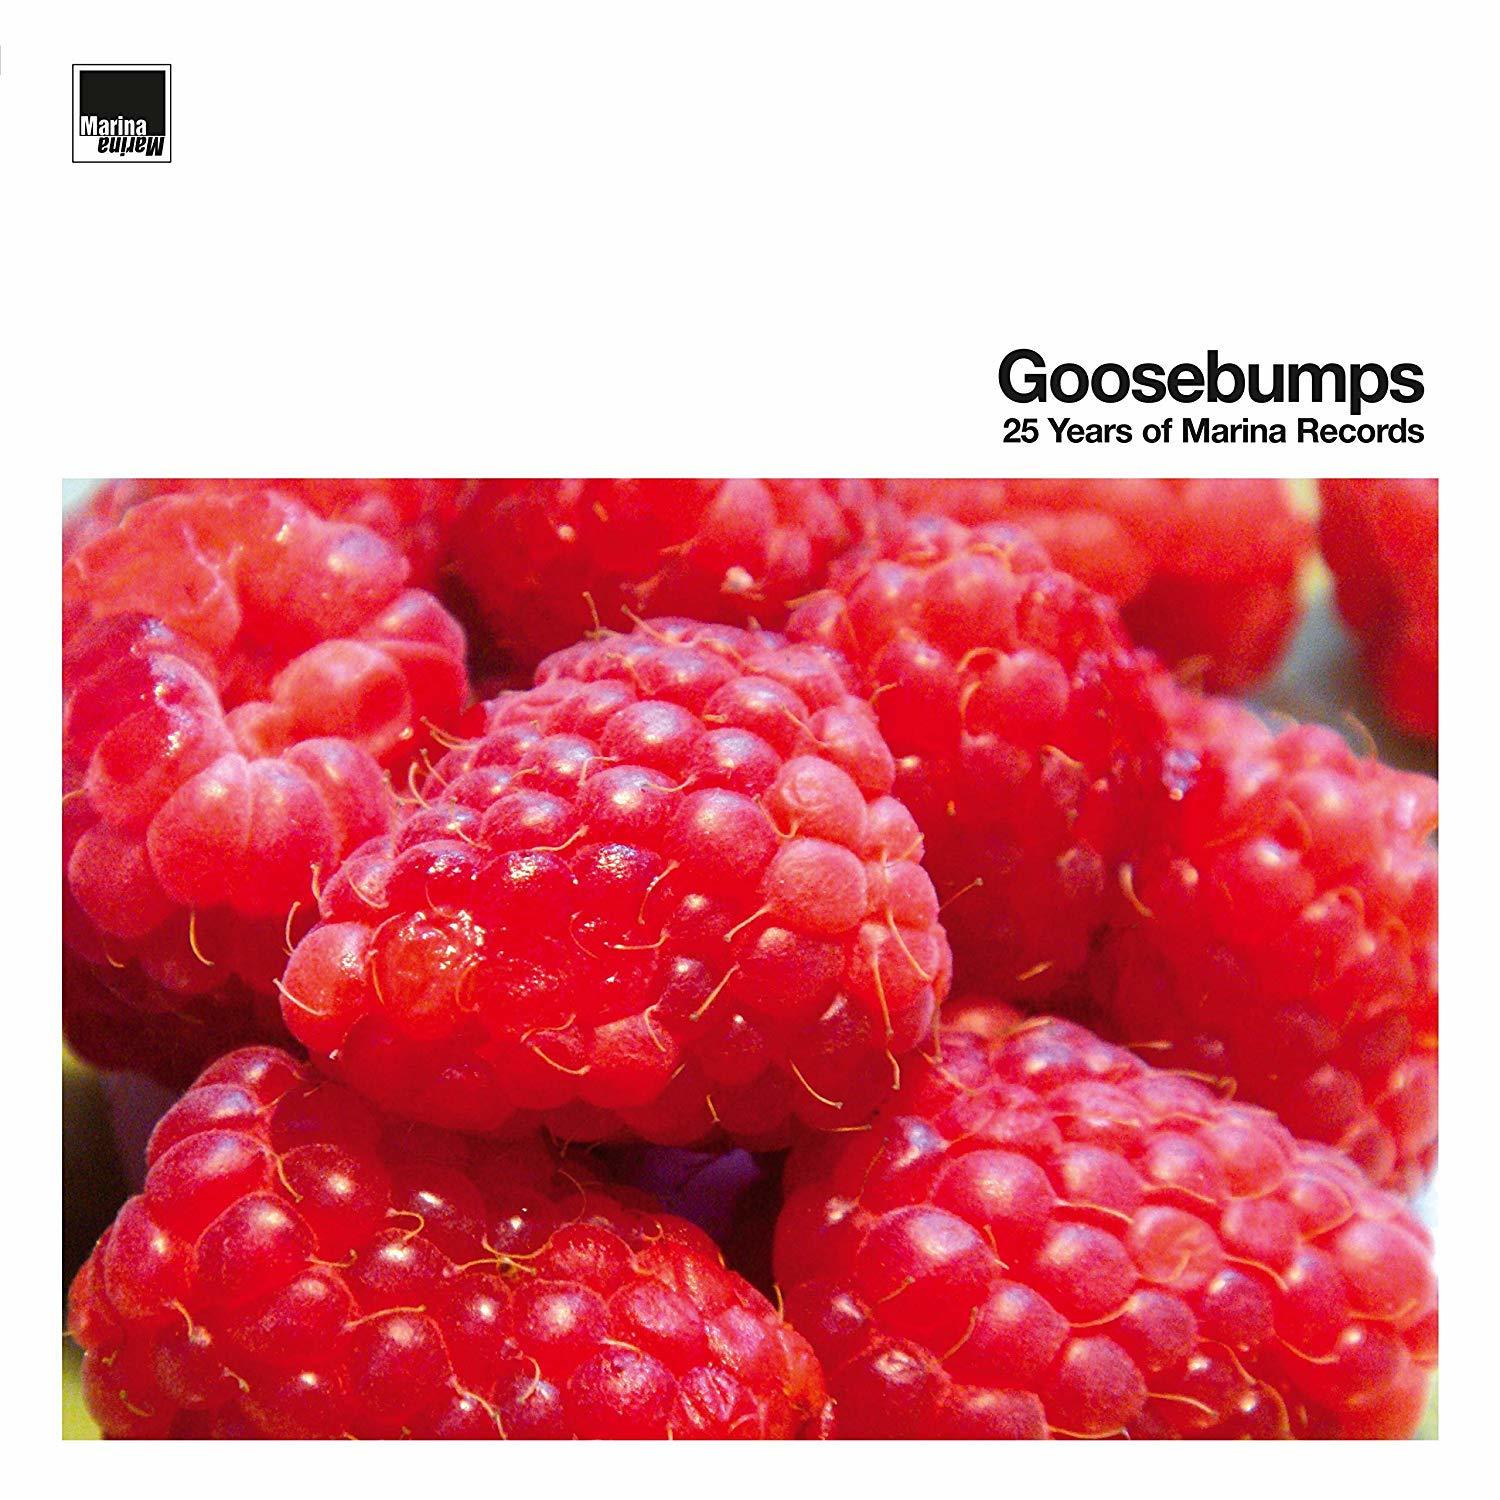 VARIOUS - Goosebumps-25 Years - Records (CD) Marina Of